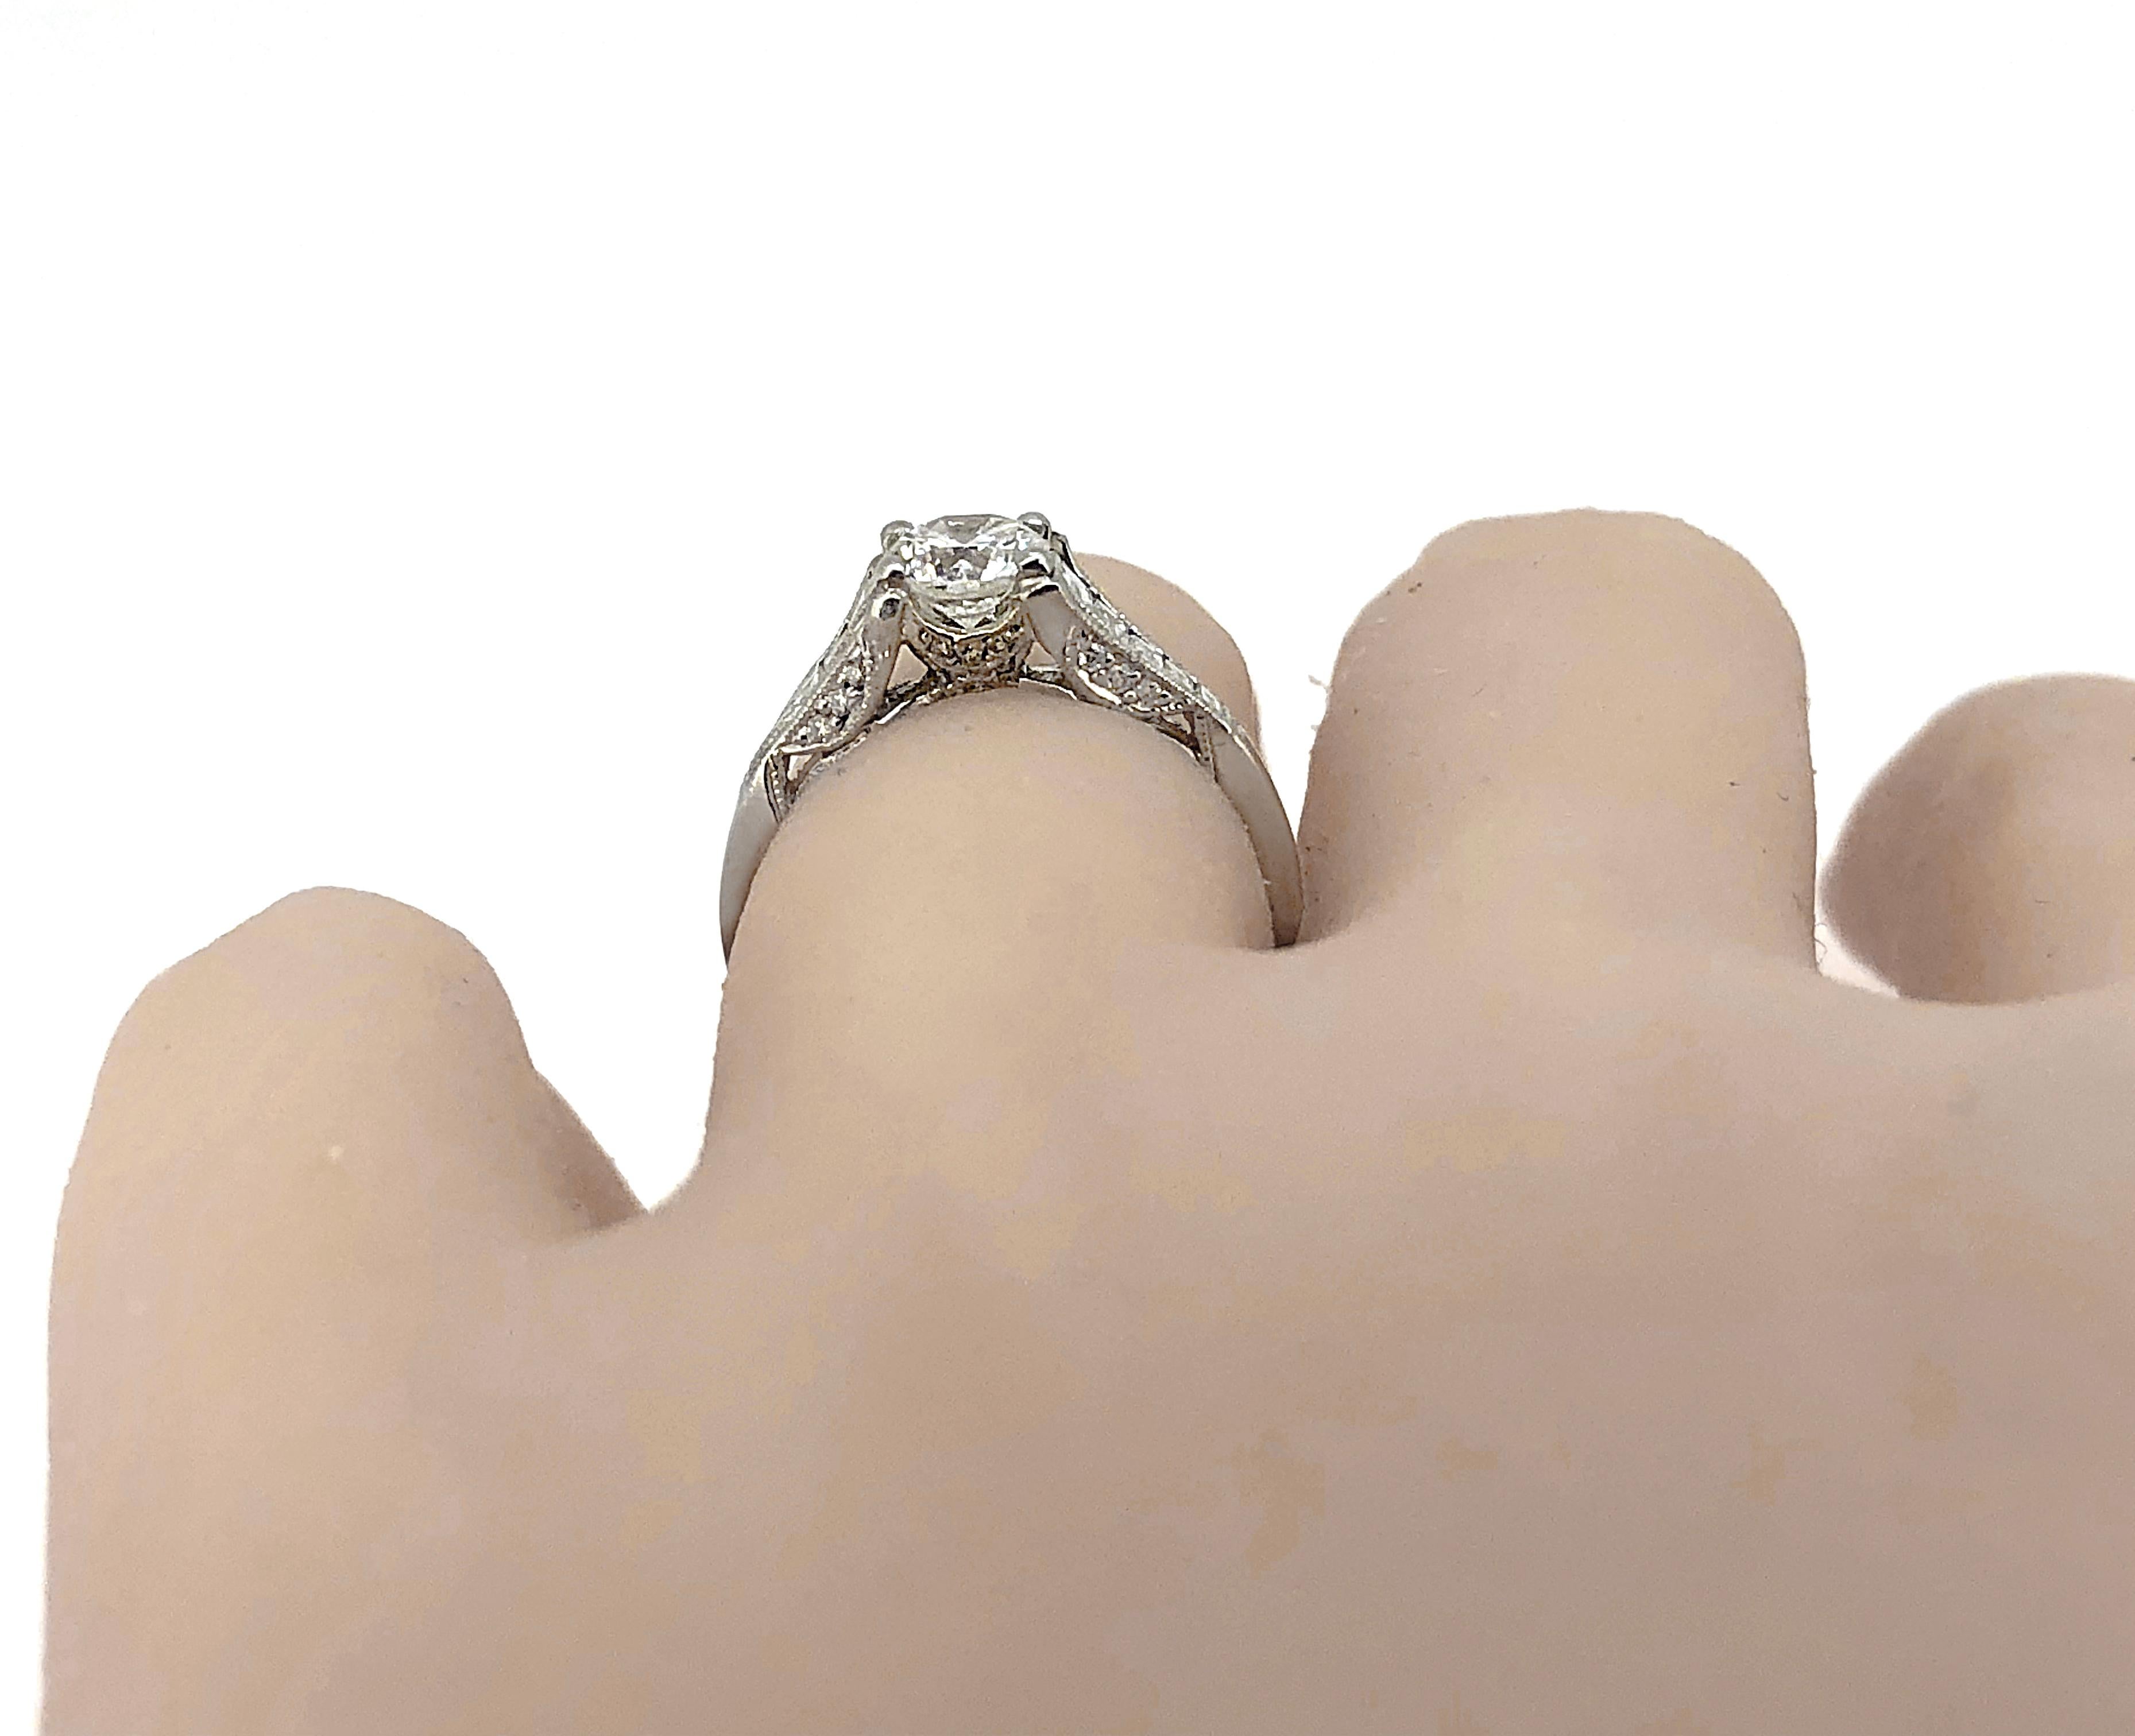 Sensational Tacori Diamond Platinum Engagement Ring In Excellent Condition For Sale In Tampa, FL